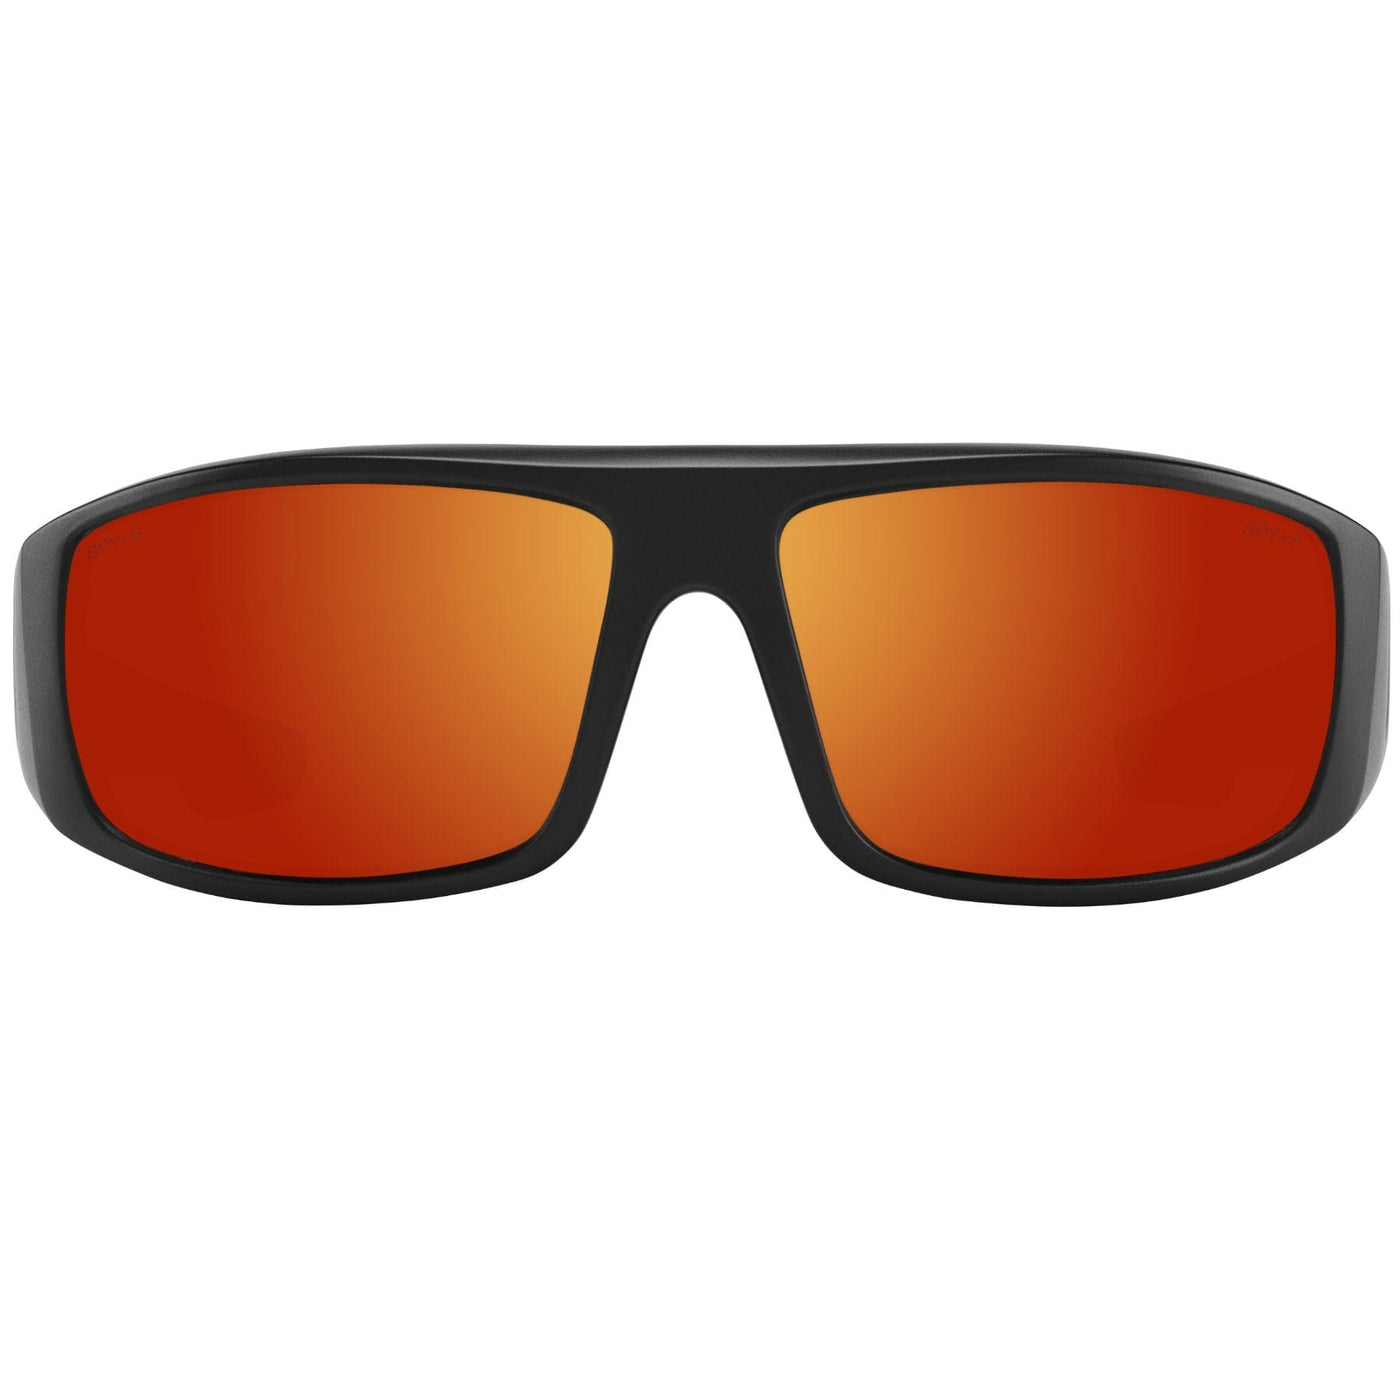 SPY LOGAN Polarized Sunglasses, Happy BOOST - Orange 8Lines Shop - Fast Shipping